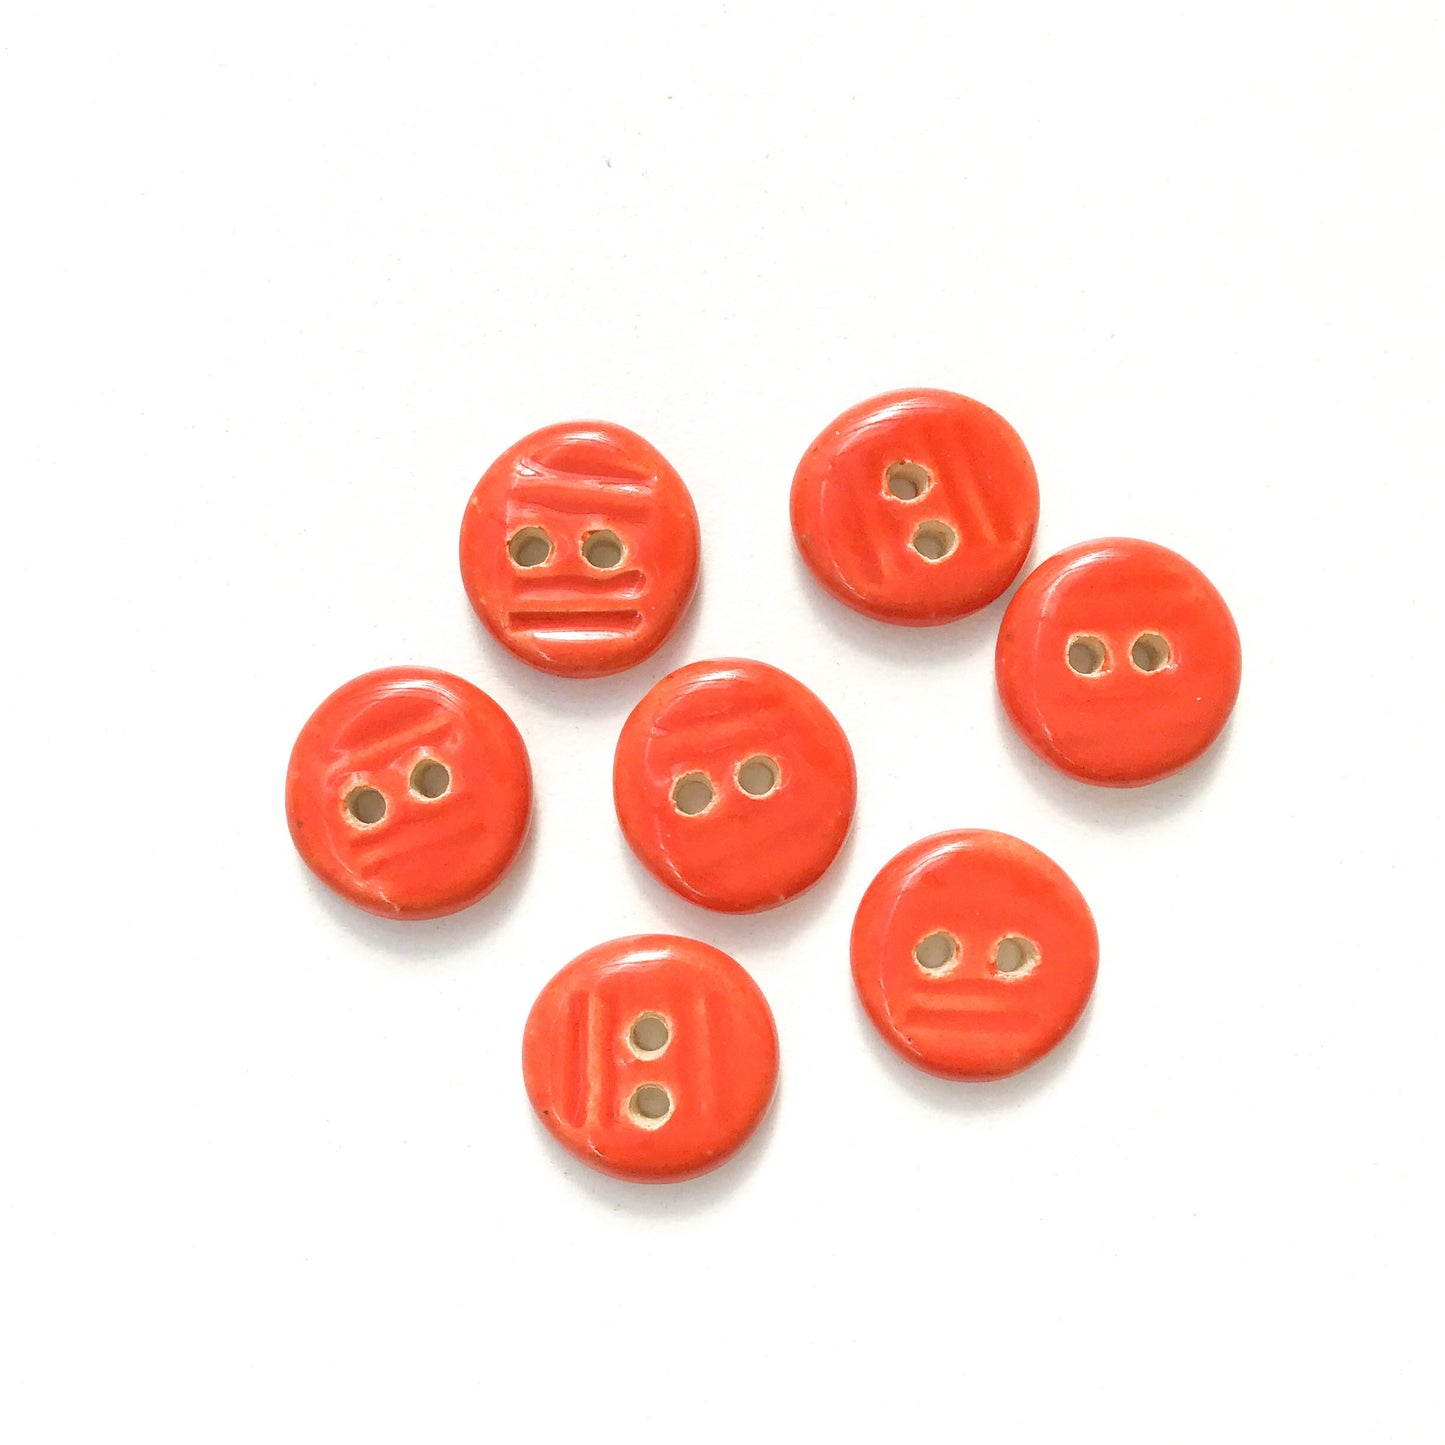 Reddish-Orange Ceramic Buttons - Small Round Ceramic Buttons - 9/16" - 7 Pack